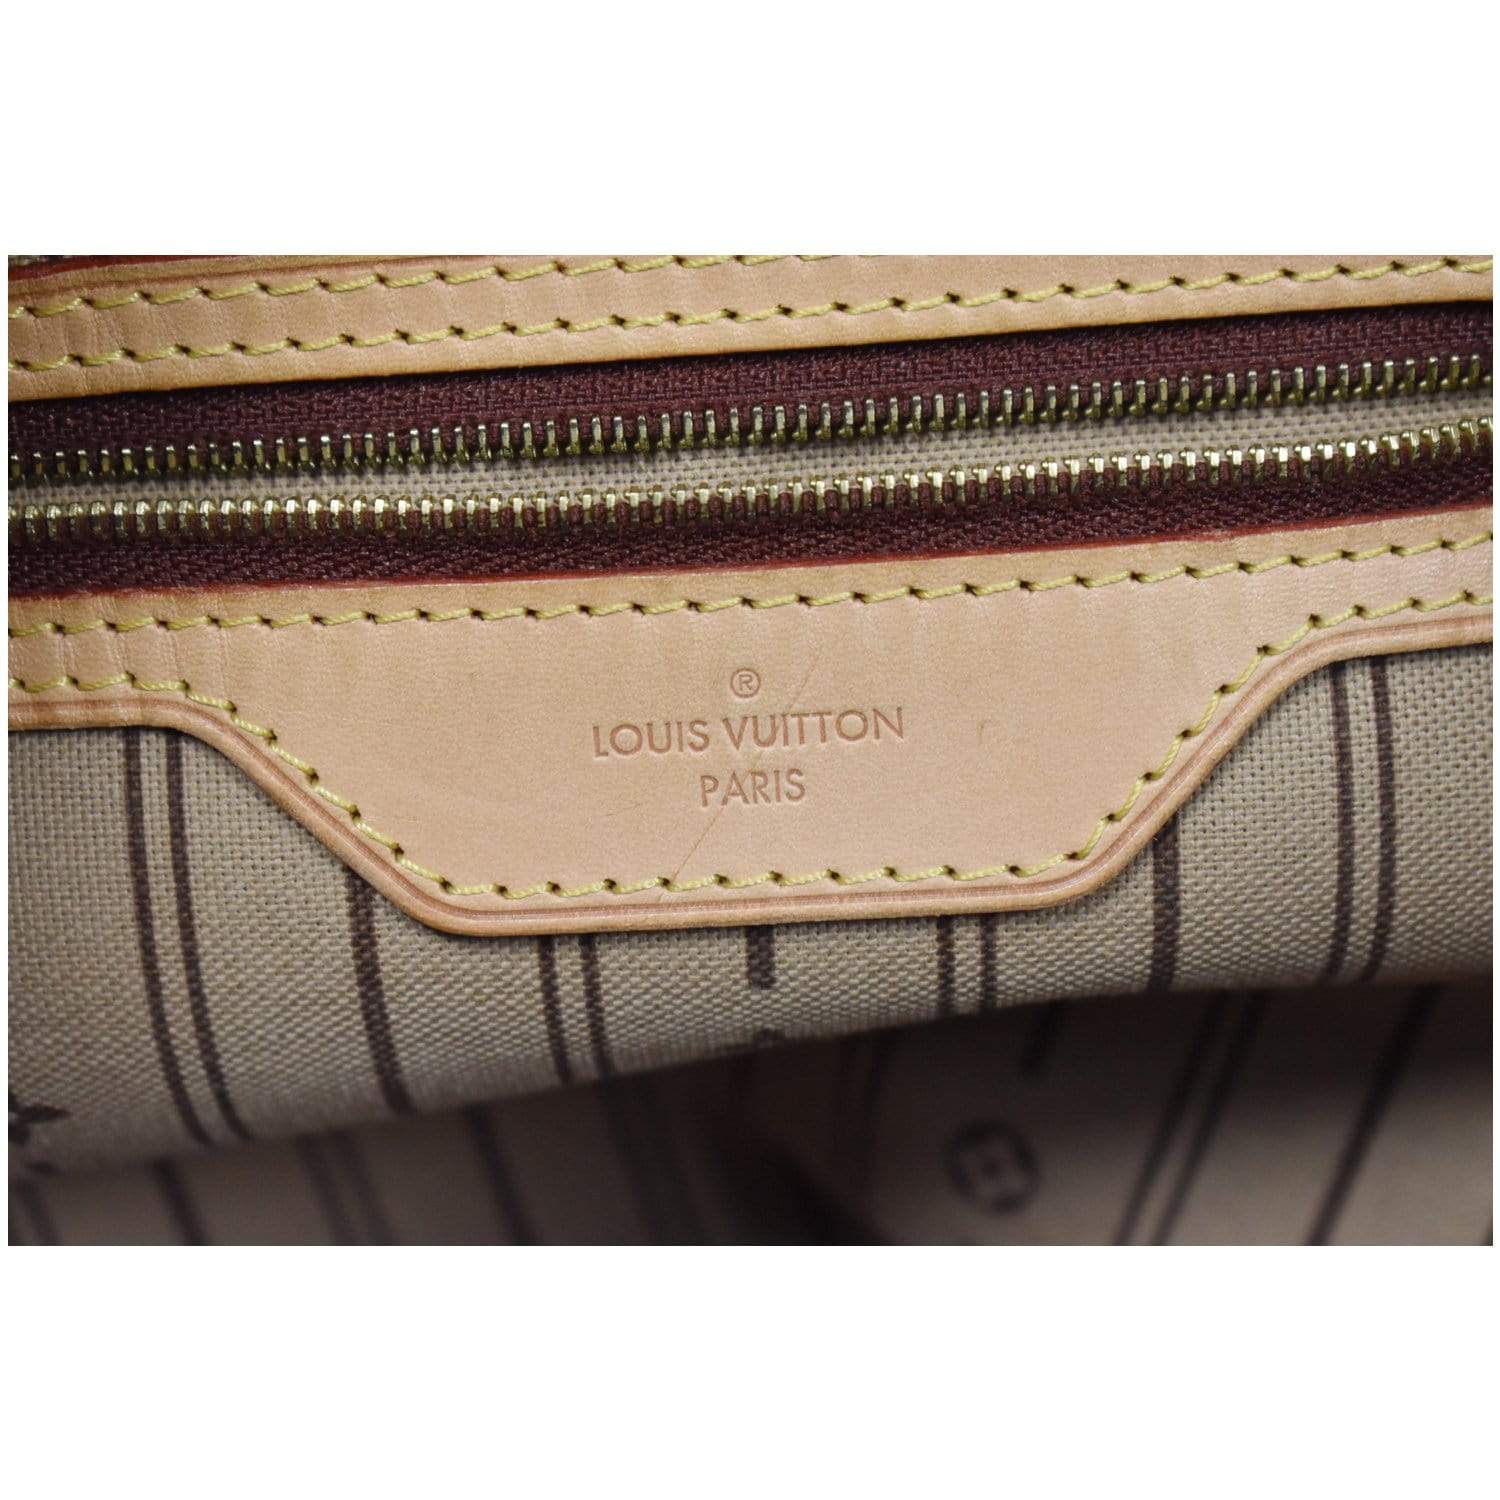 Date Code & Stamp] Louis Vuitton Sac Weekend GM Monogram Canvas